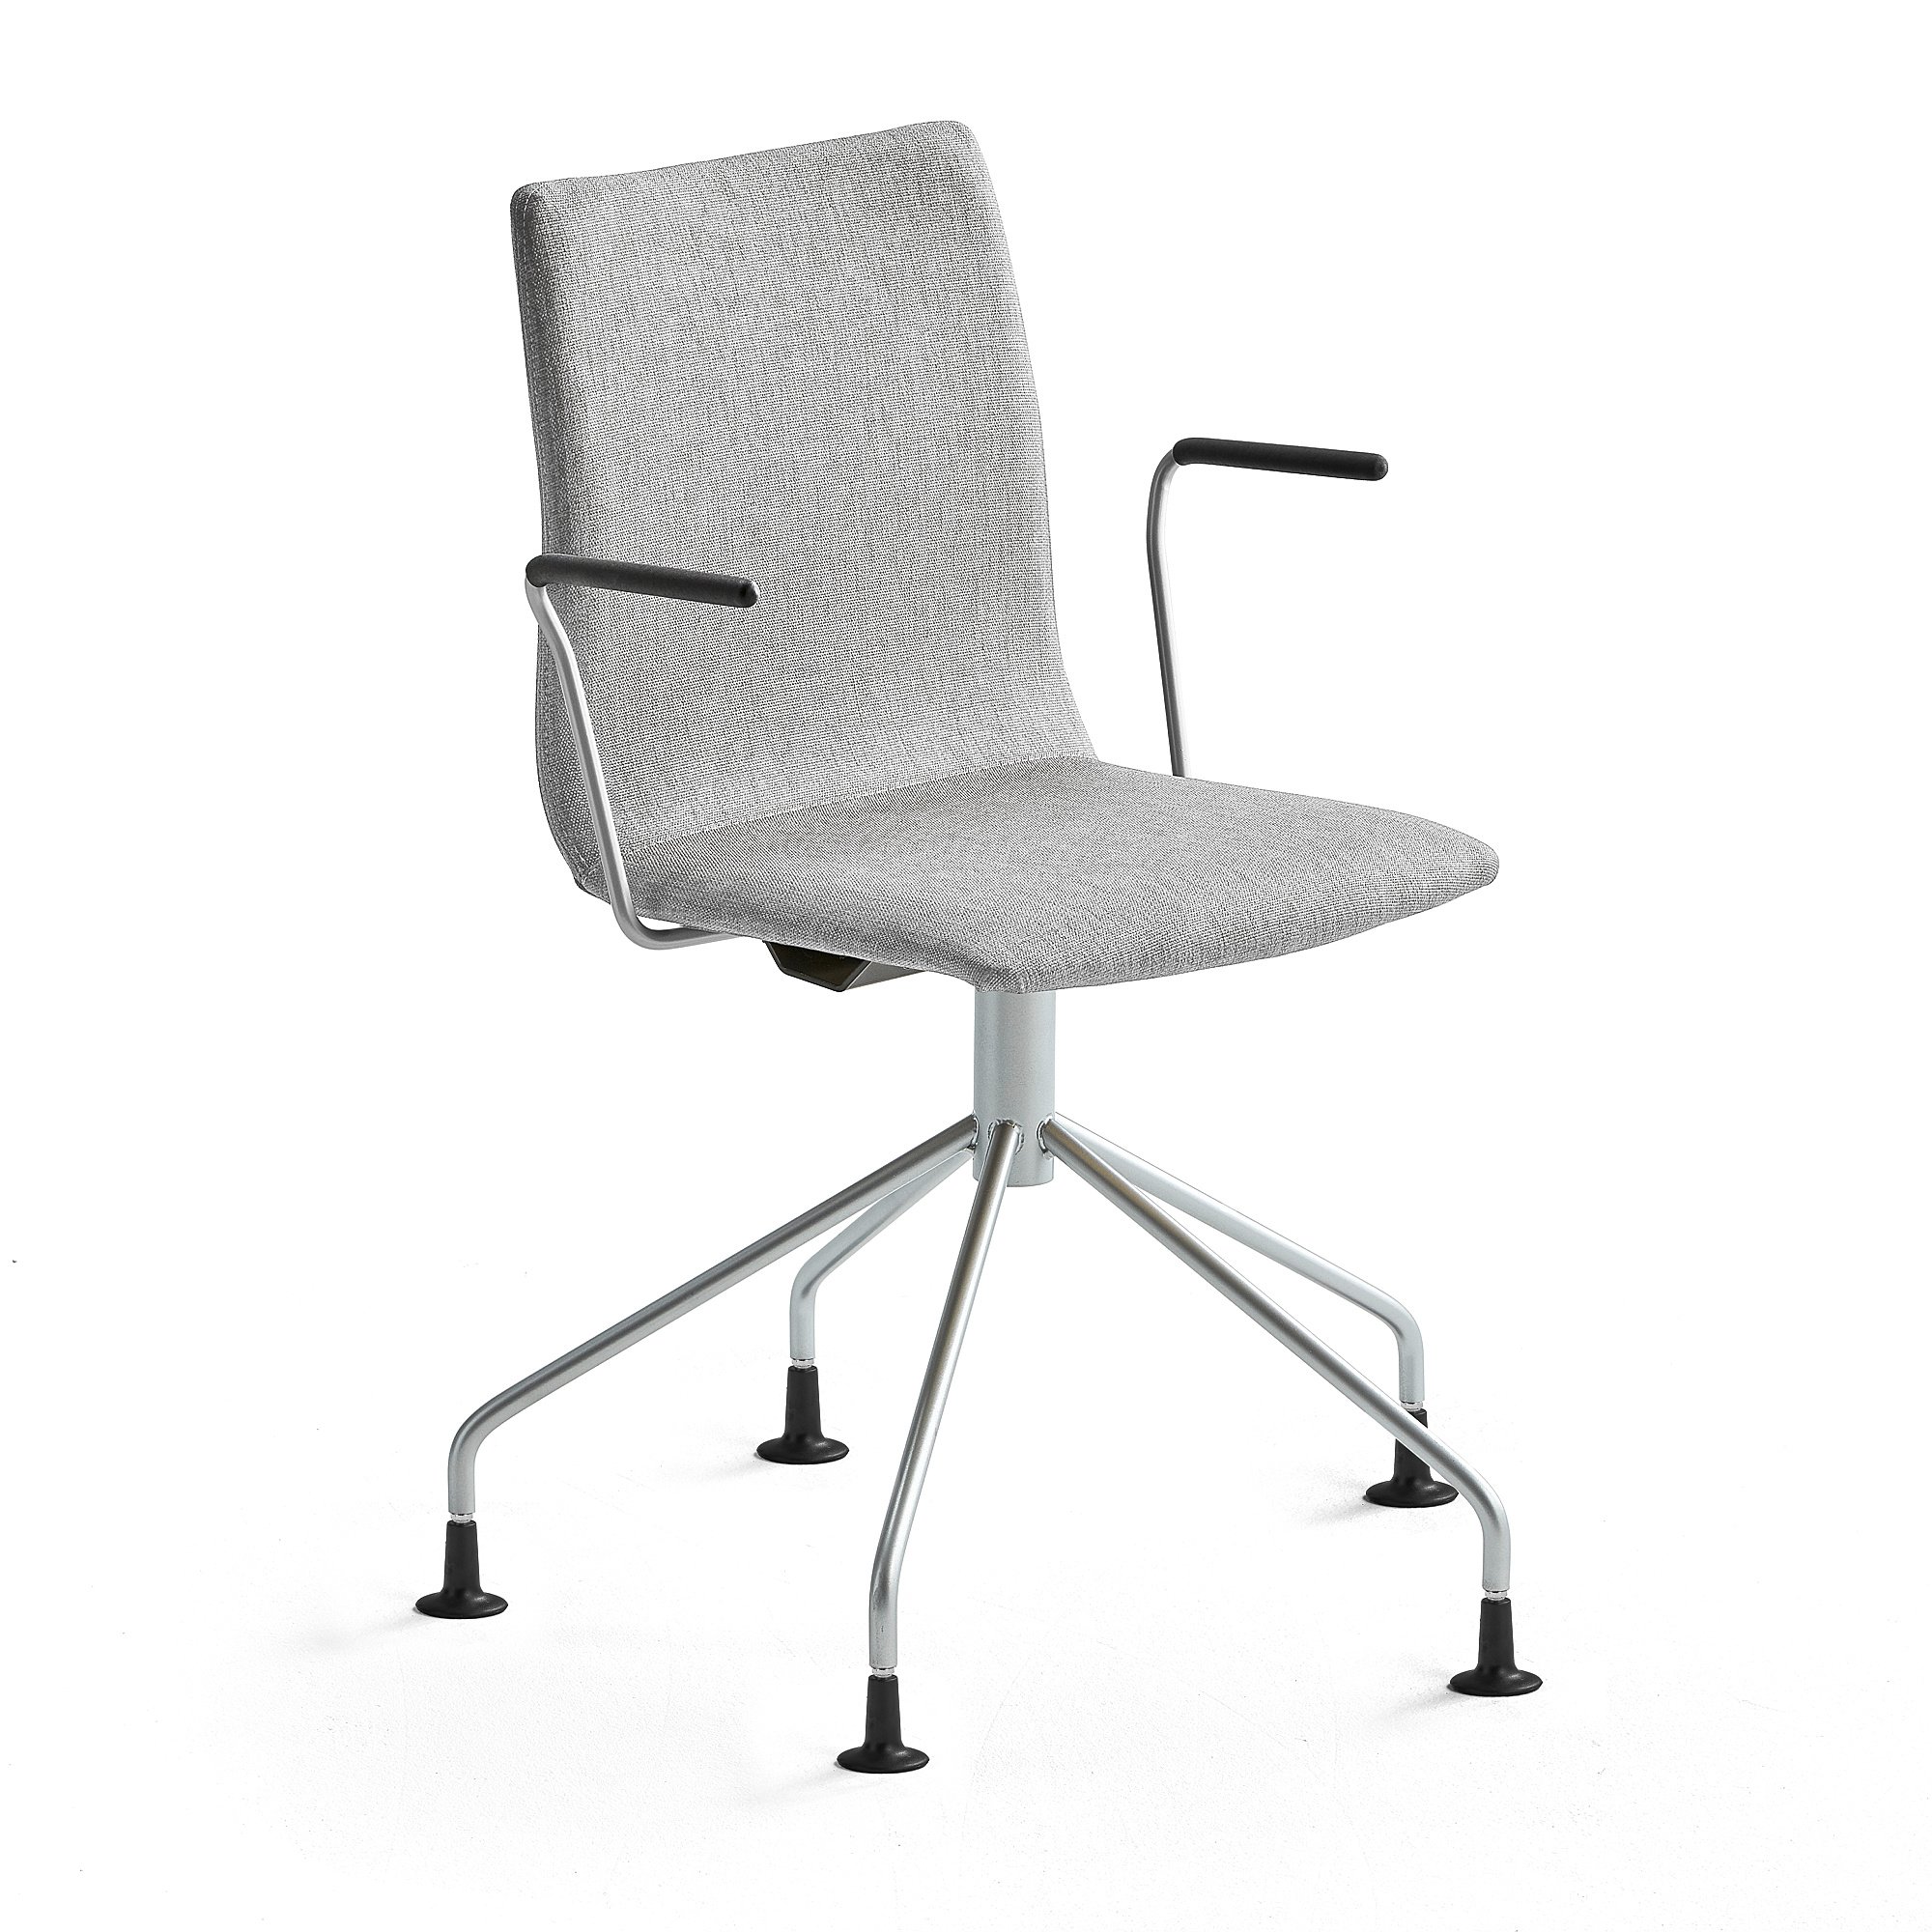 E-shop Konferenčná stolička OTTAWA, štýlová podnož + opierky rúk, strieborná/šedá